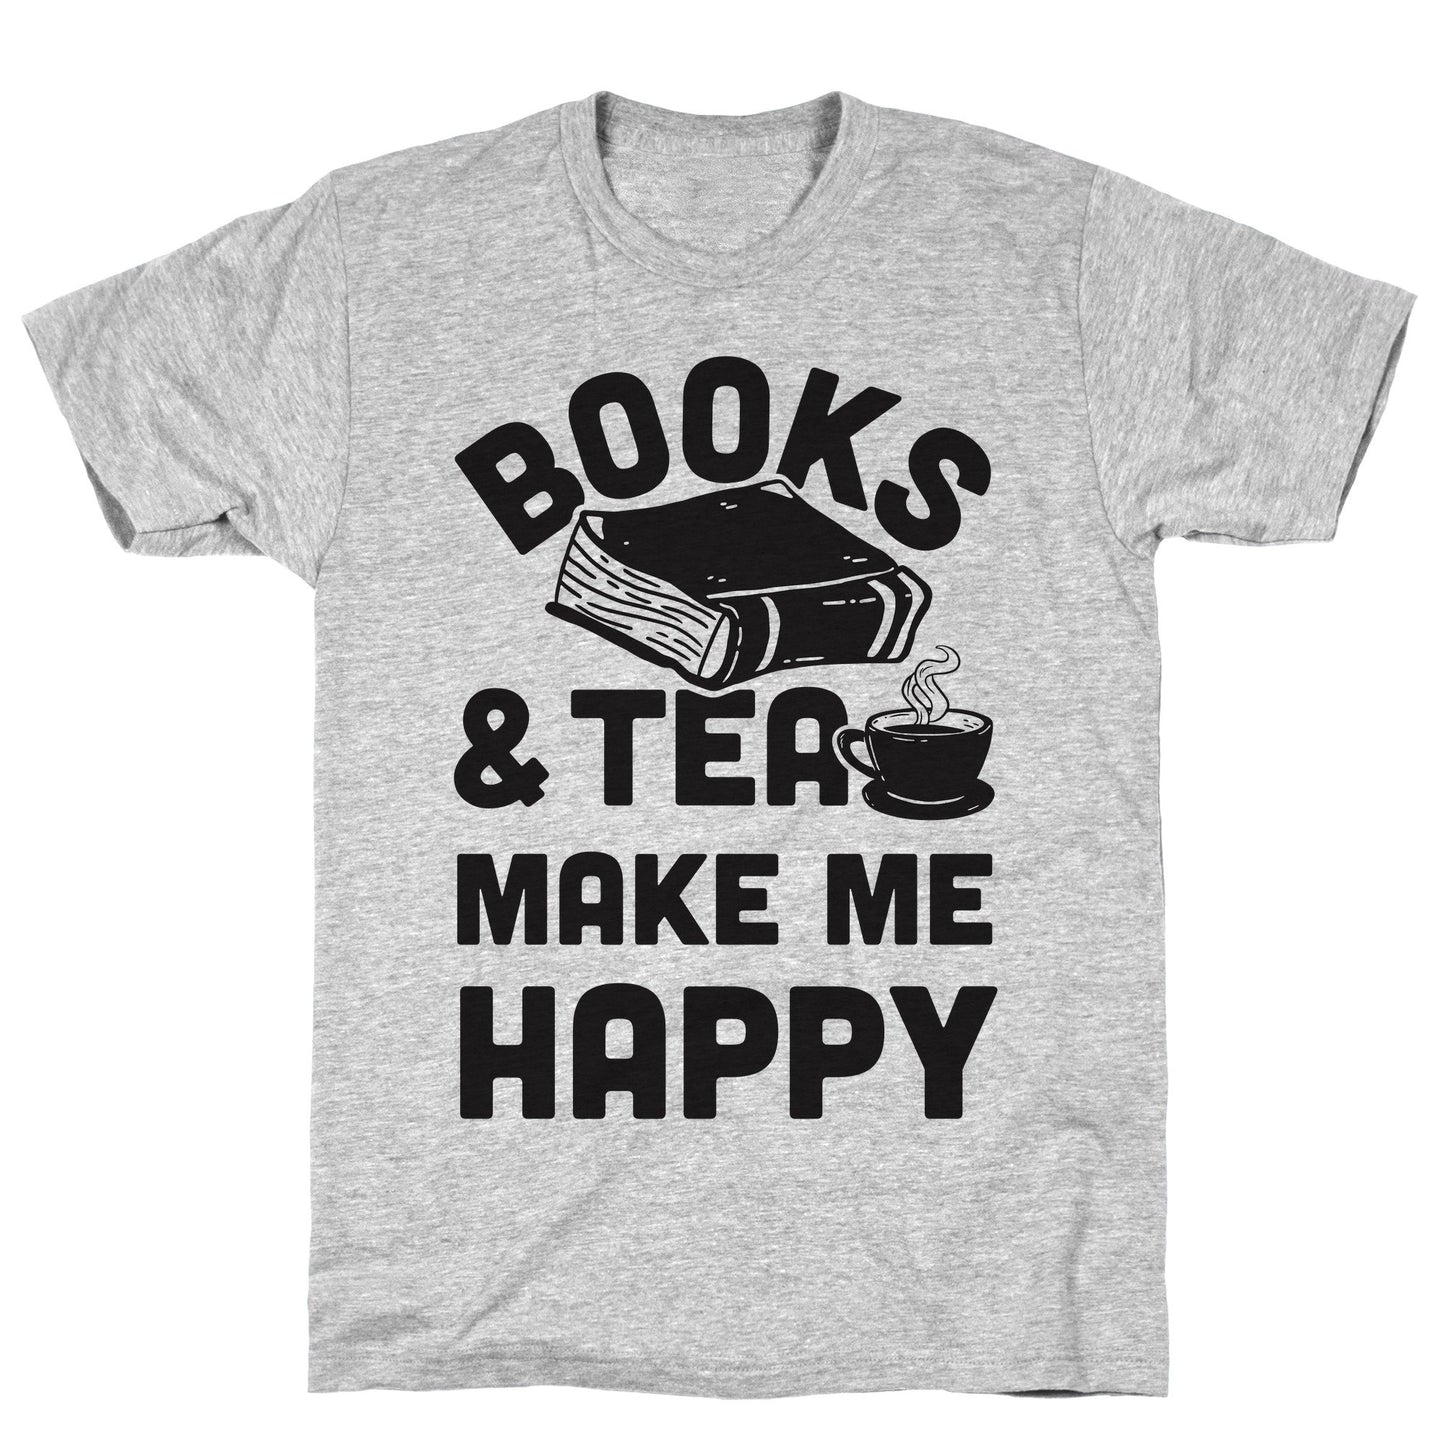 Books & Tea Make Me Happy Athletic Gray Unisex Cotton Tee